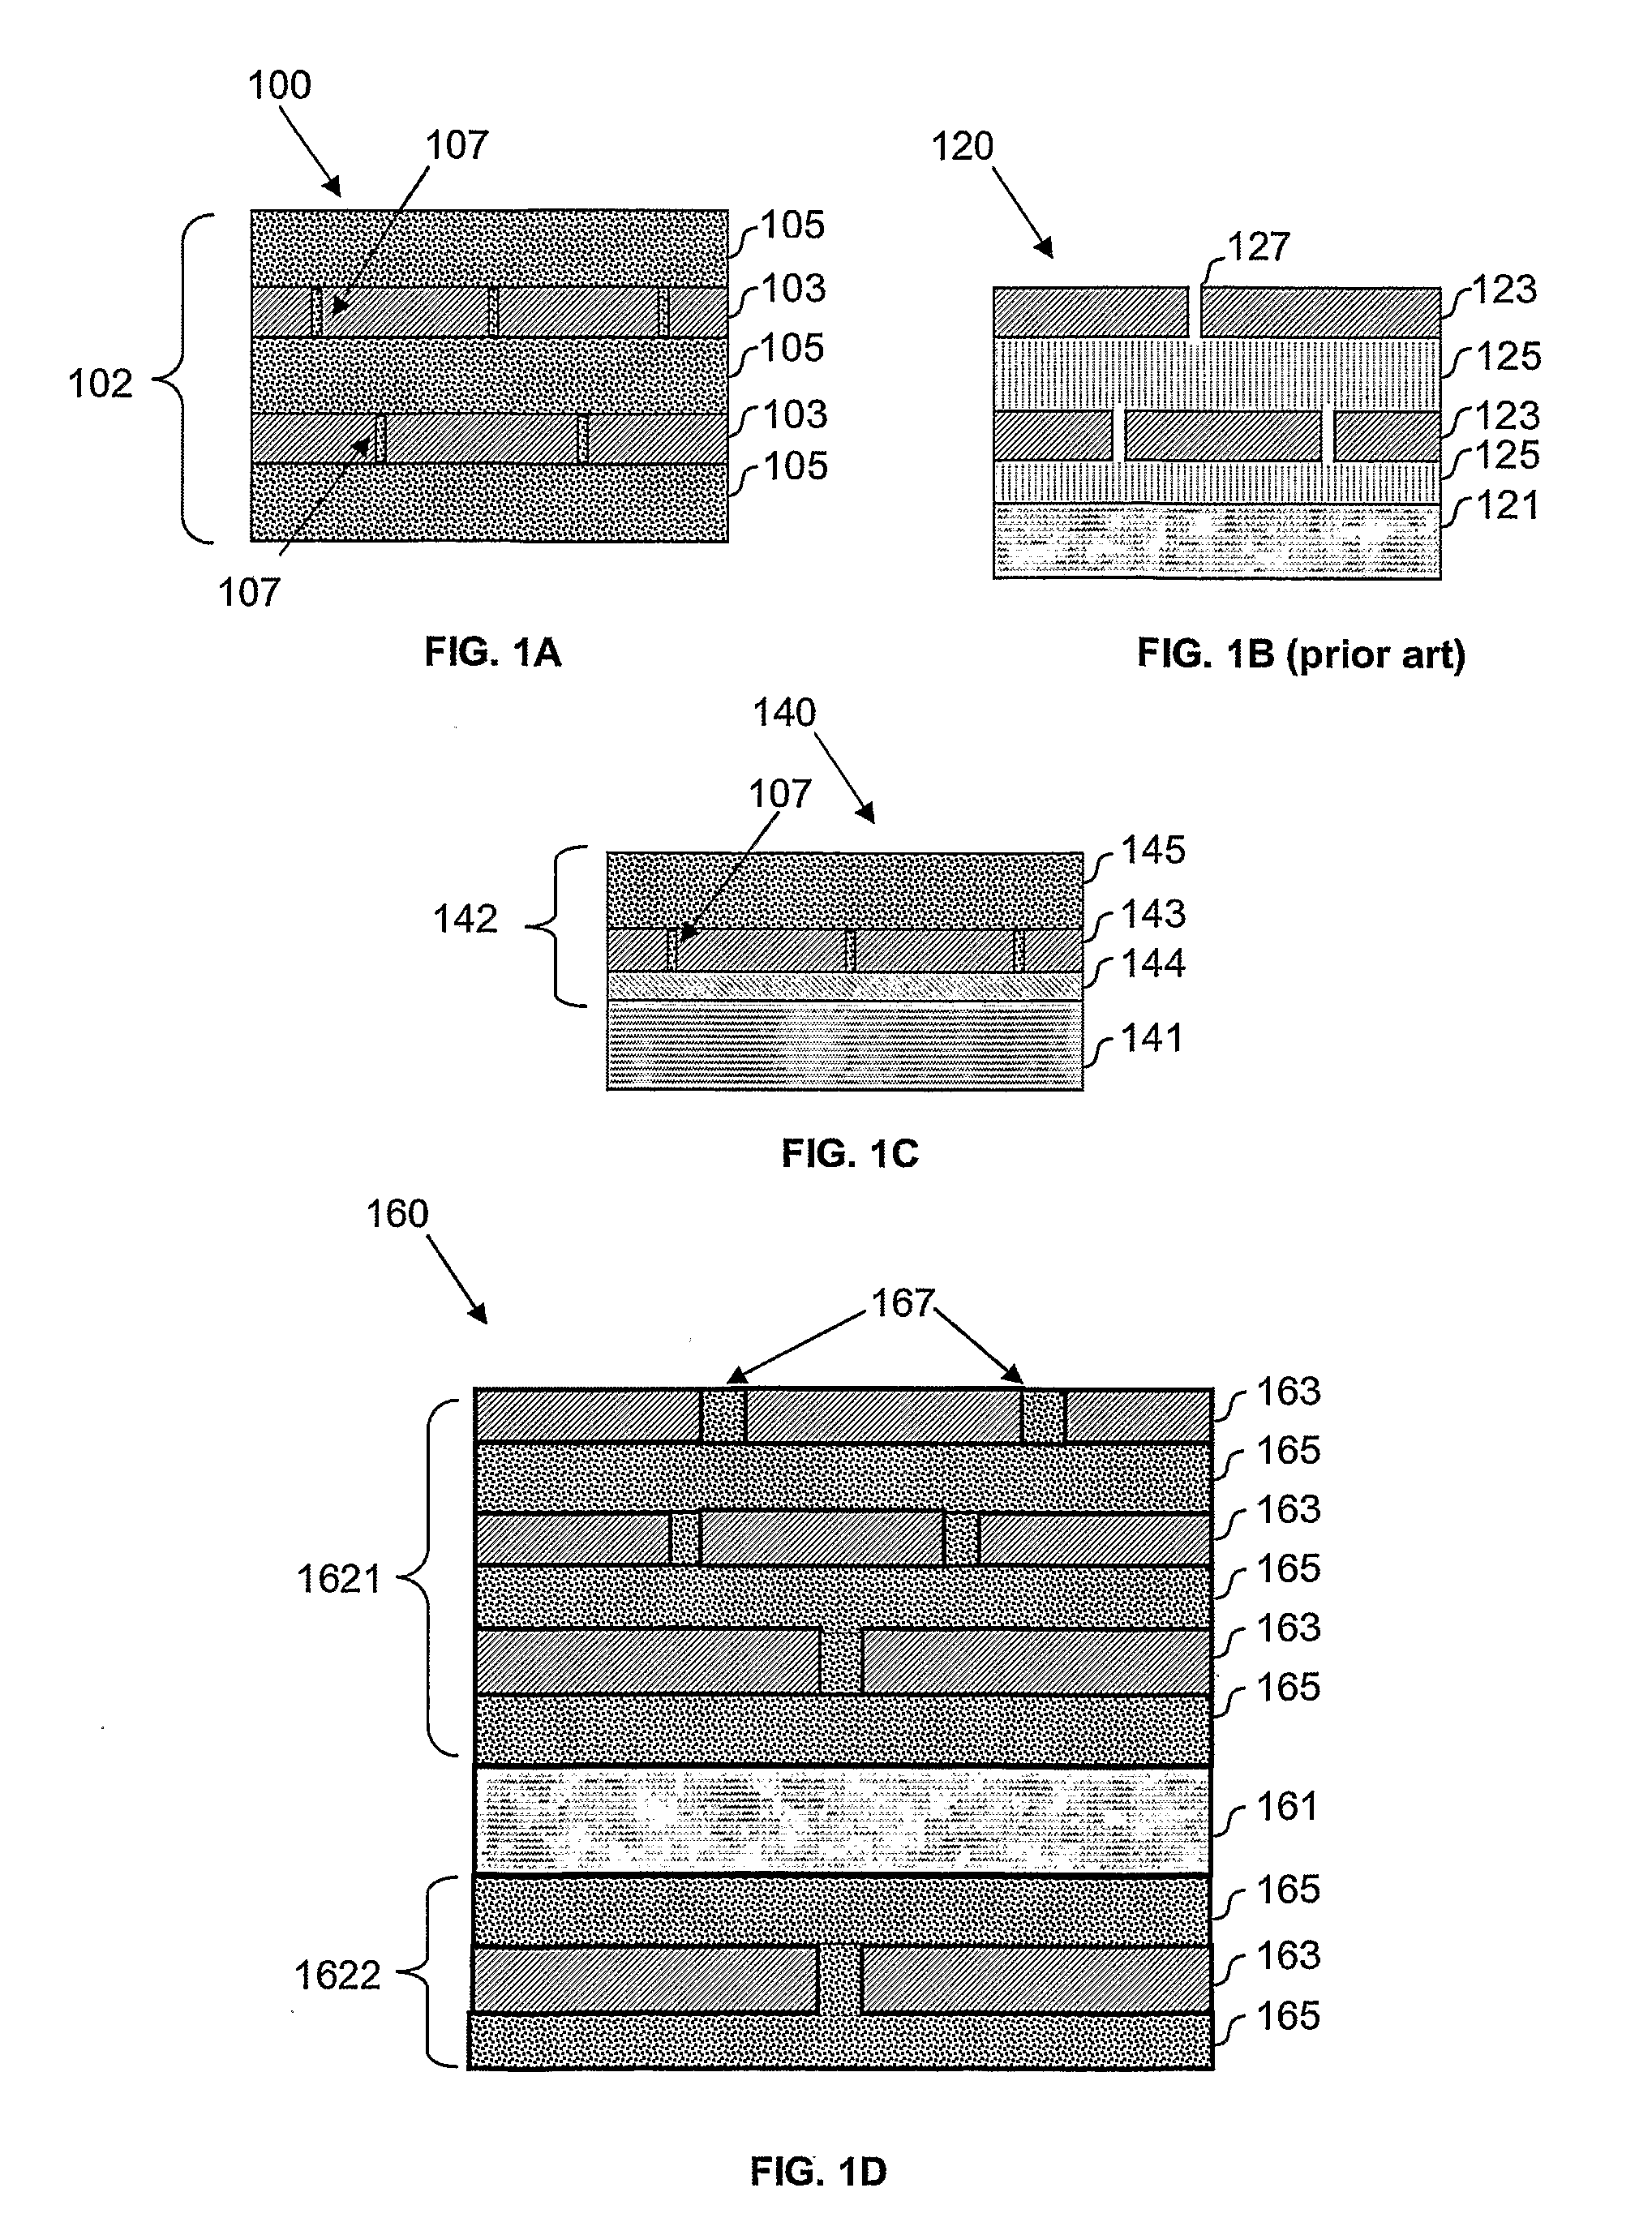 Nanoparticulate encapsulation barrier stack